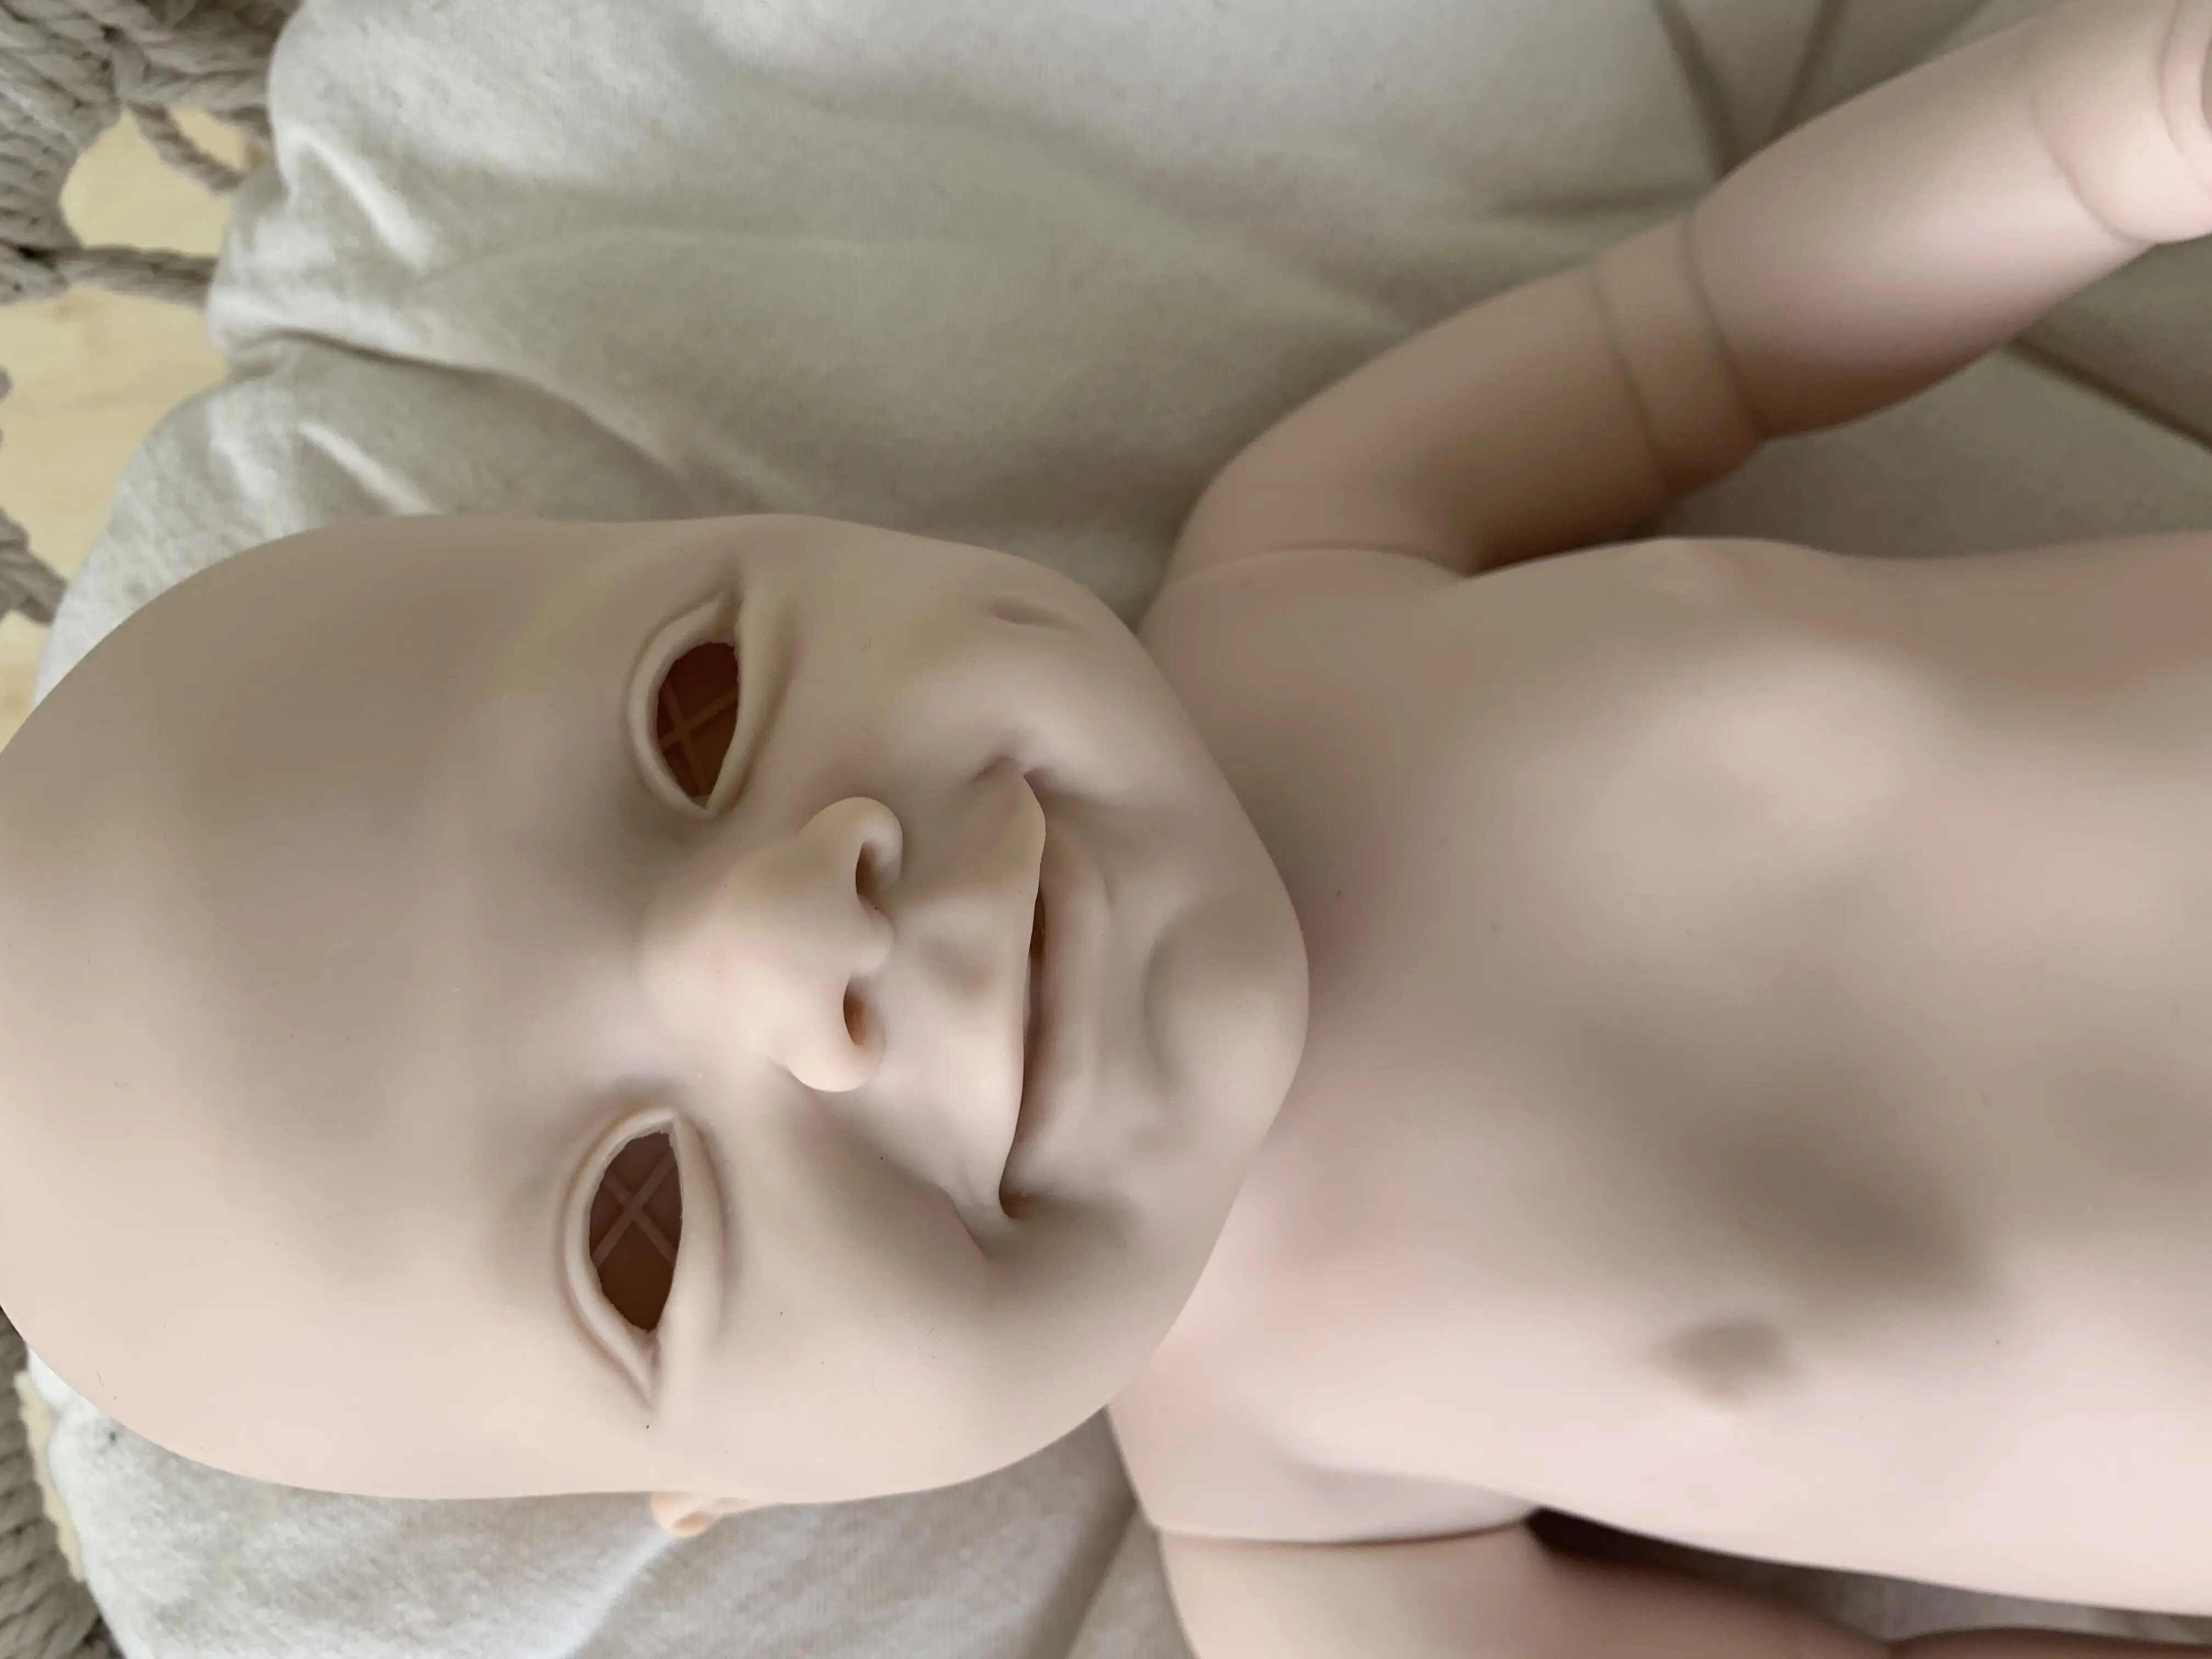 Details about   20'' Unpainted Reborn Kits Vinyl Head&Limbs&Cloth Body DIY Sleeping Baby Dolls 